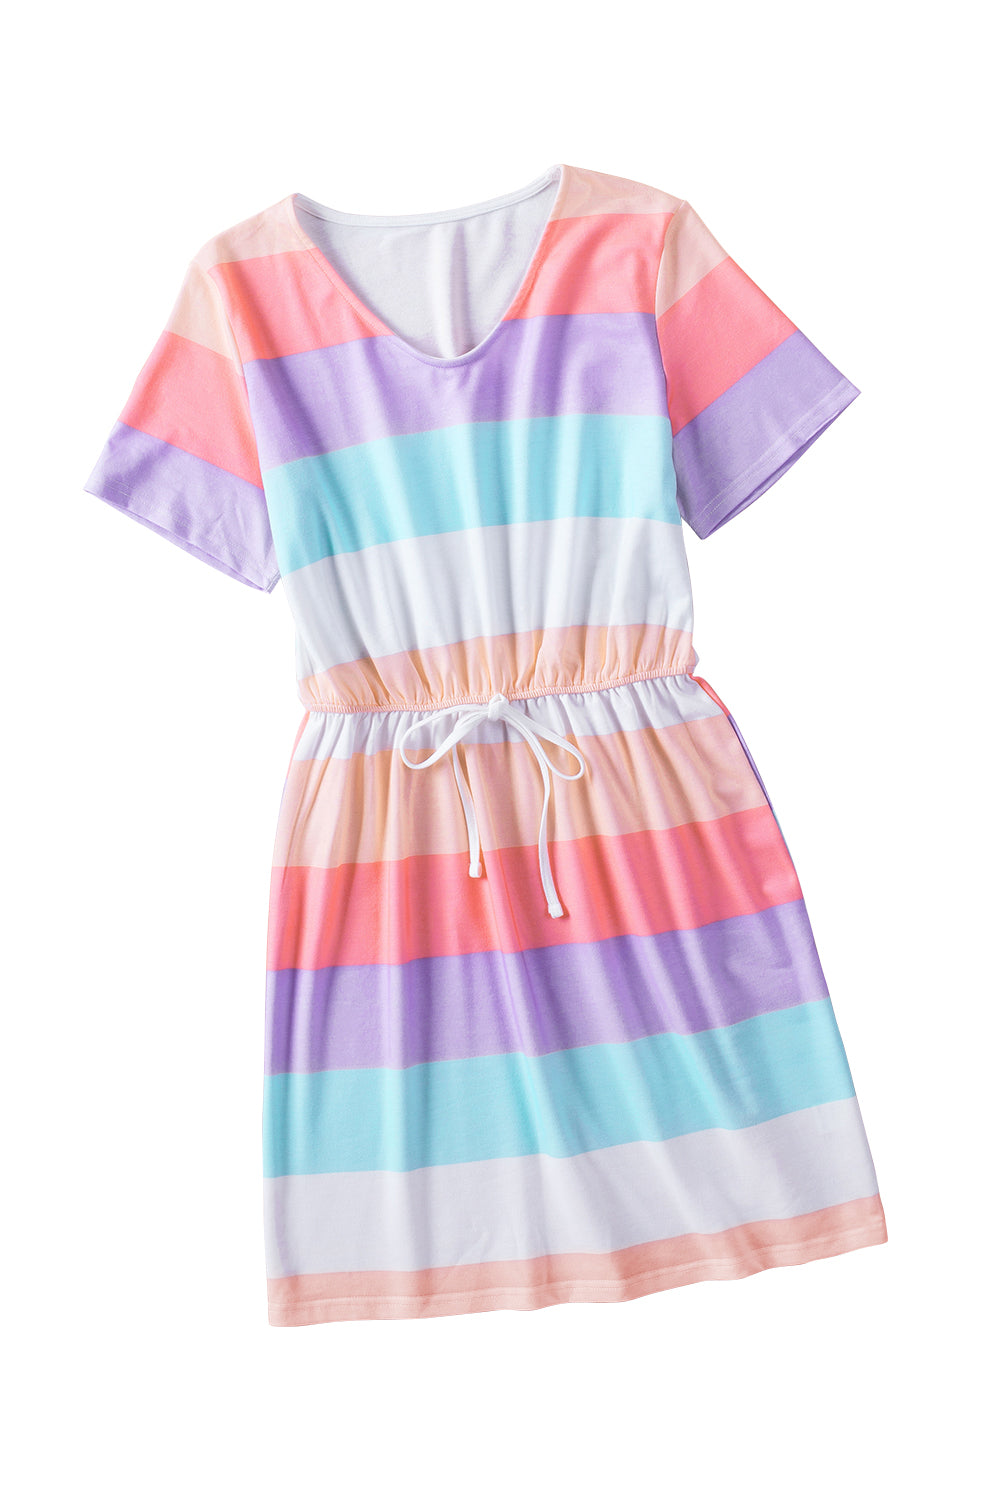 Multicolor Stripes Print Casual Short T Shirt Rainbow Dress